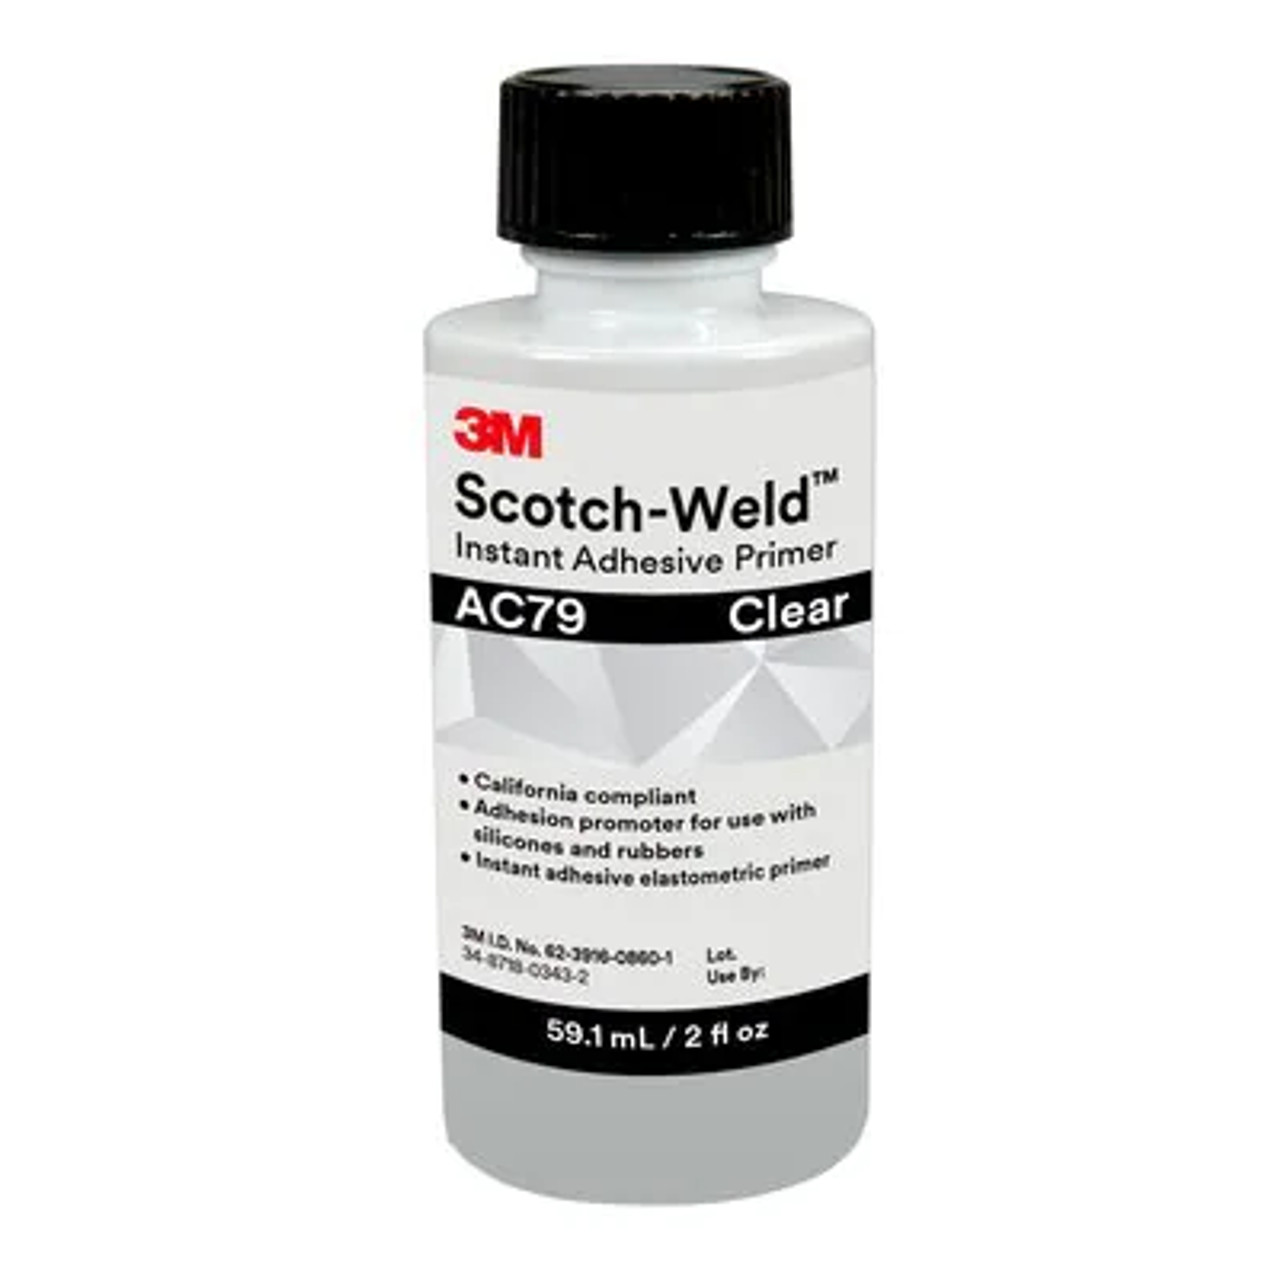 3M™ Scotch-Weld™ Instant Adhesive Primer AC79, Clear, 2 fl oz Bottle